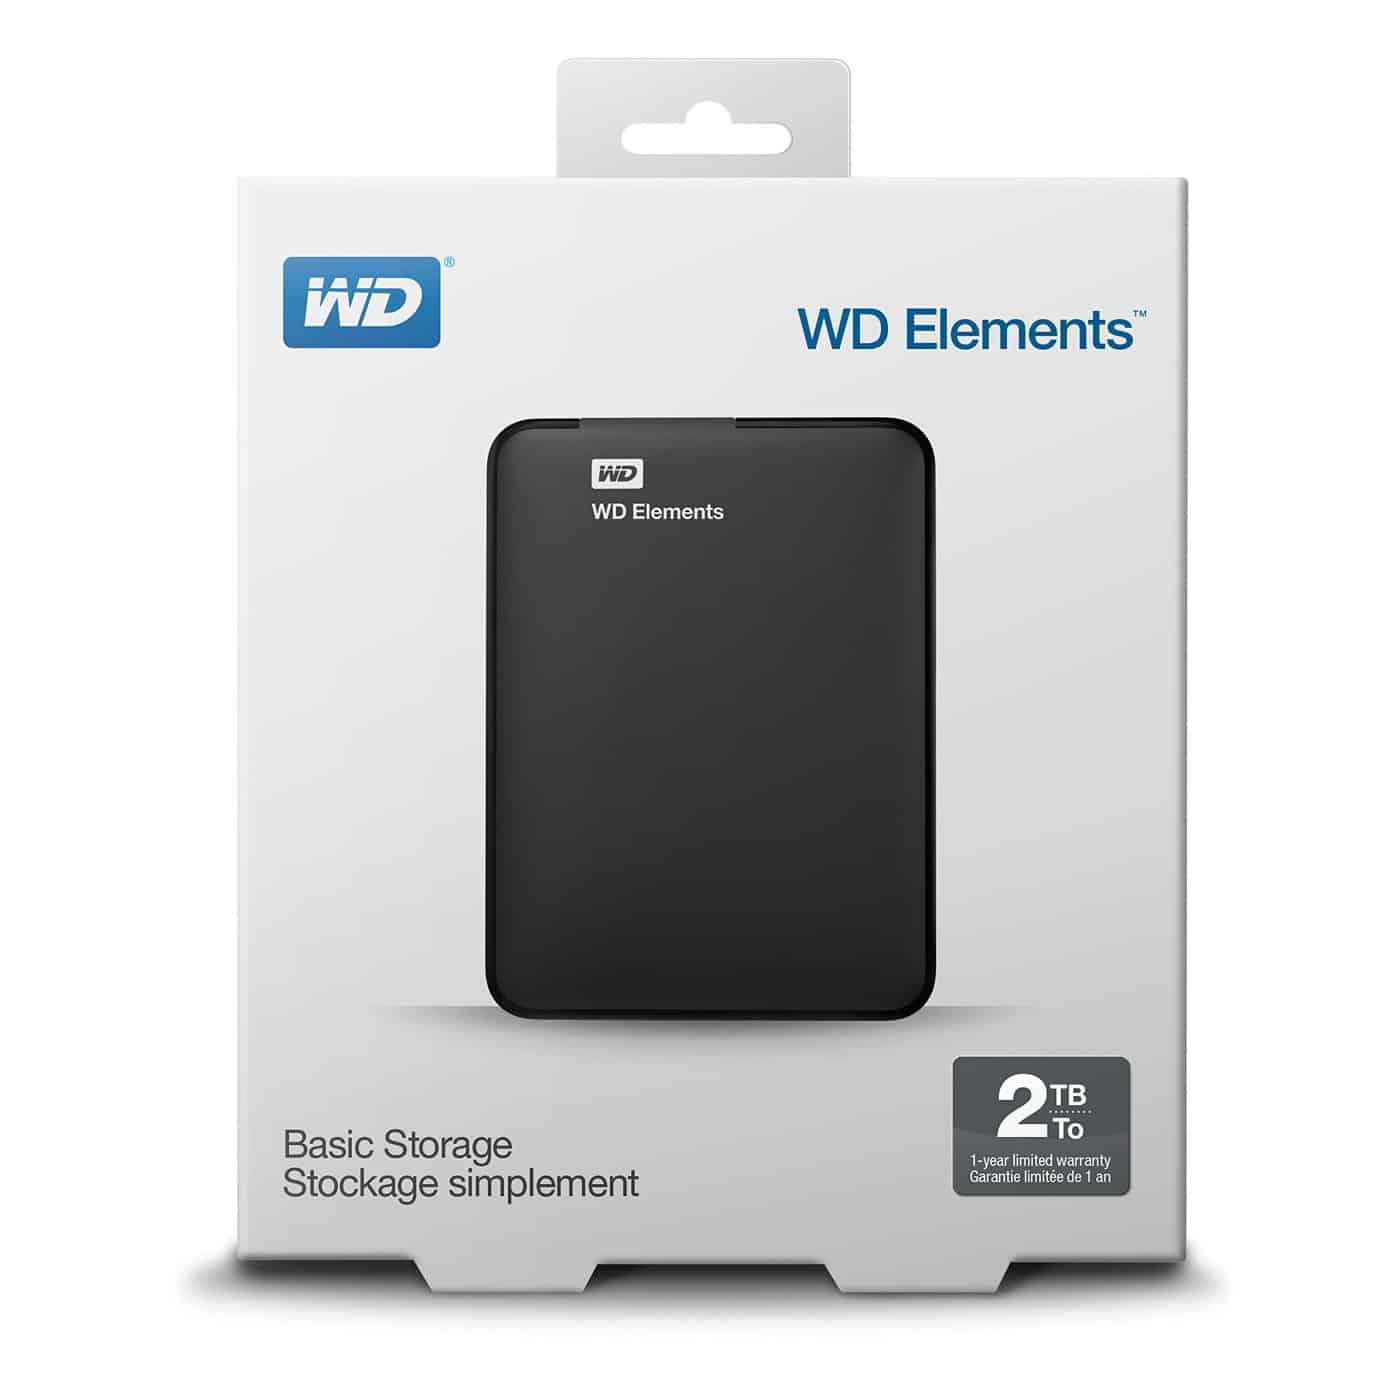 WD Elements 2TB External Hard Drive